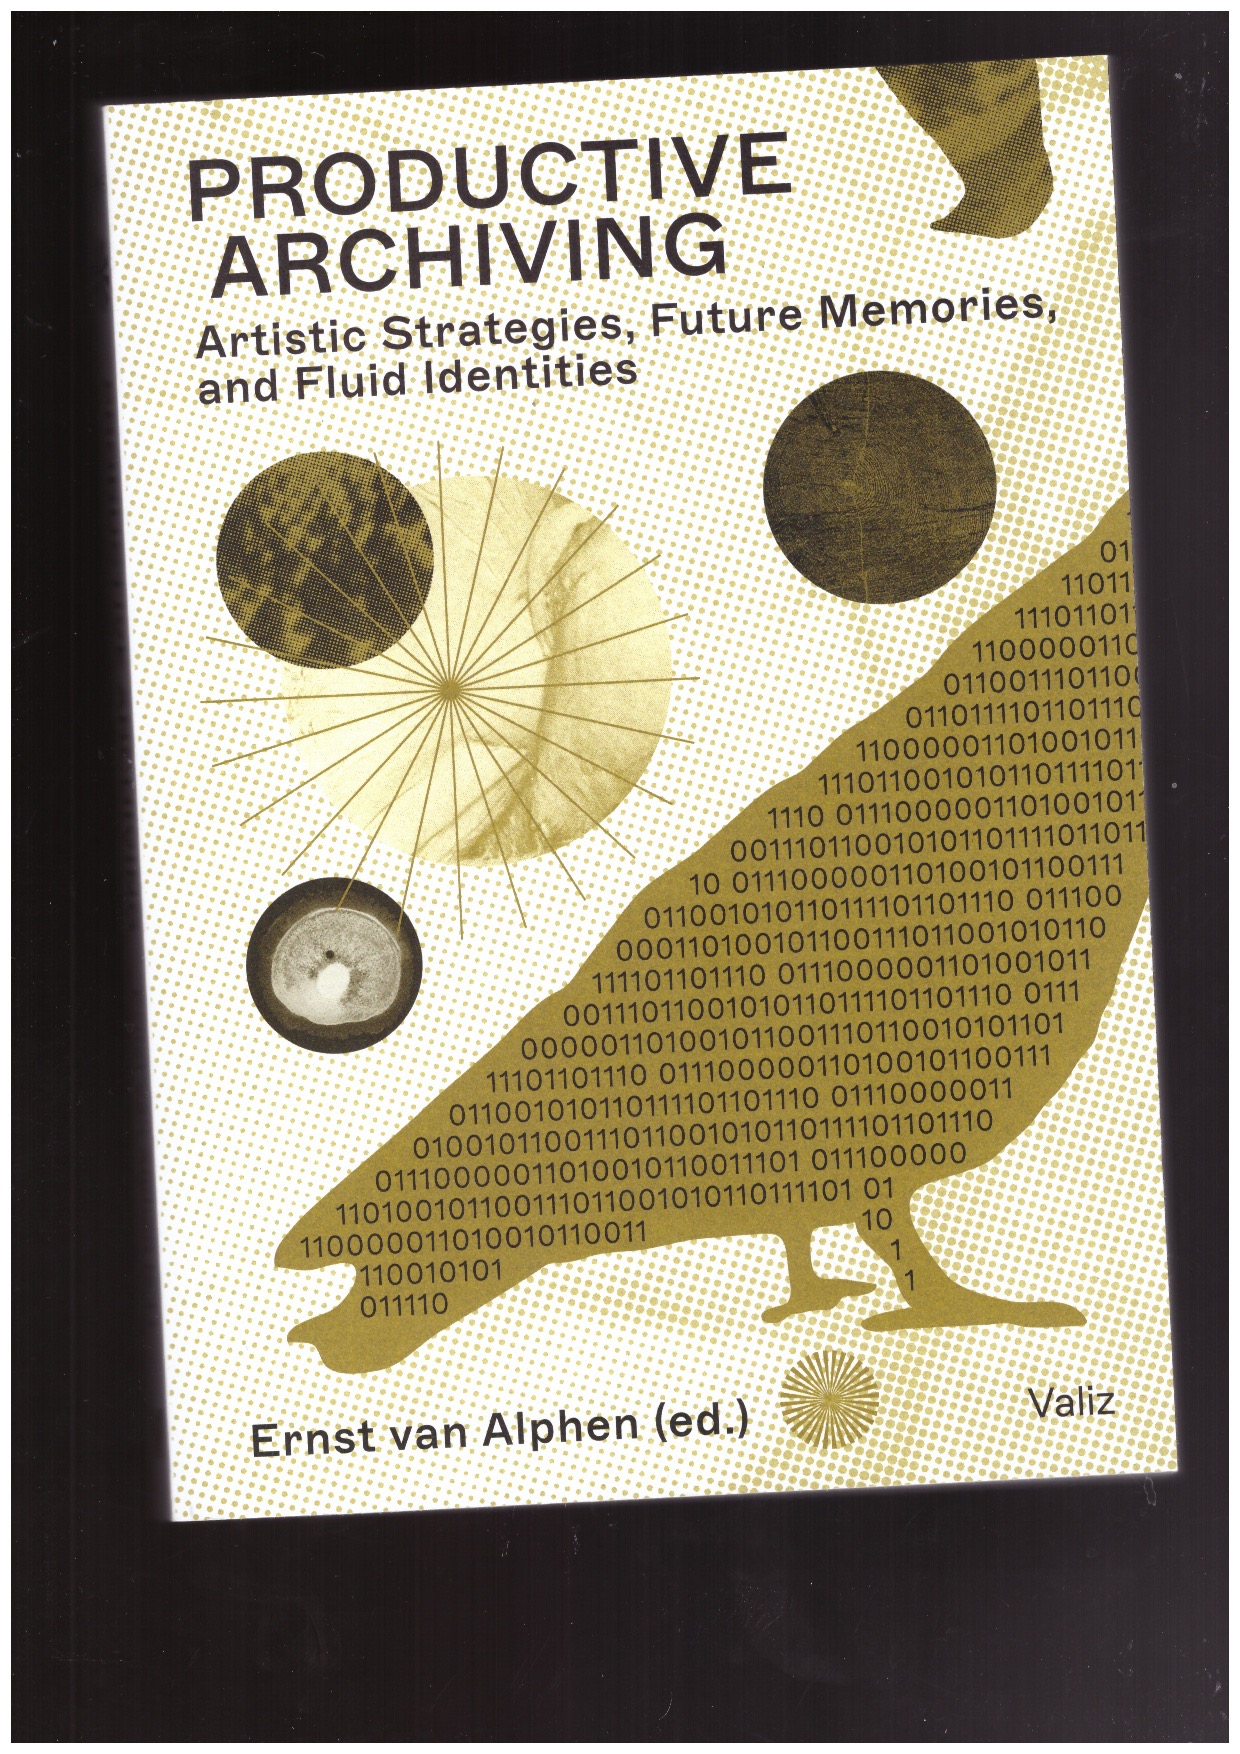 VAN ALPHEN, Ernst (ed.) - Productive Archiving. Artistic Strategies, Future Memories and Fluid Identities